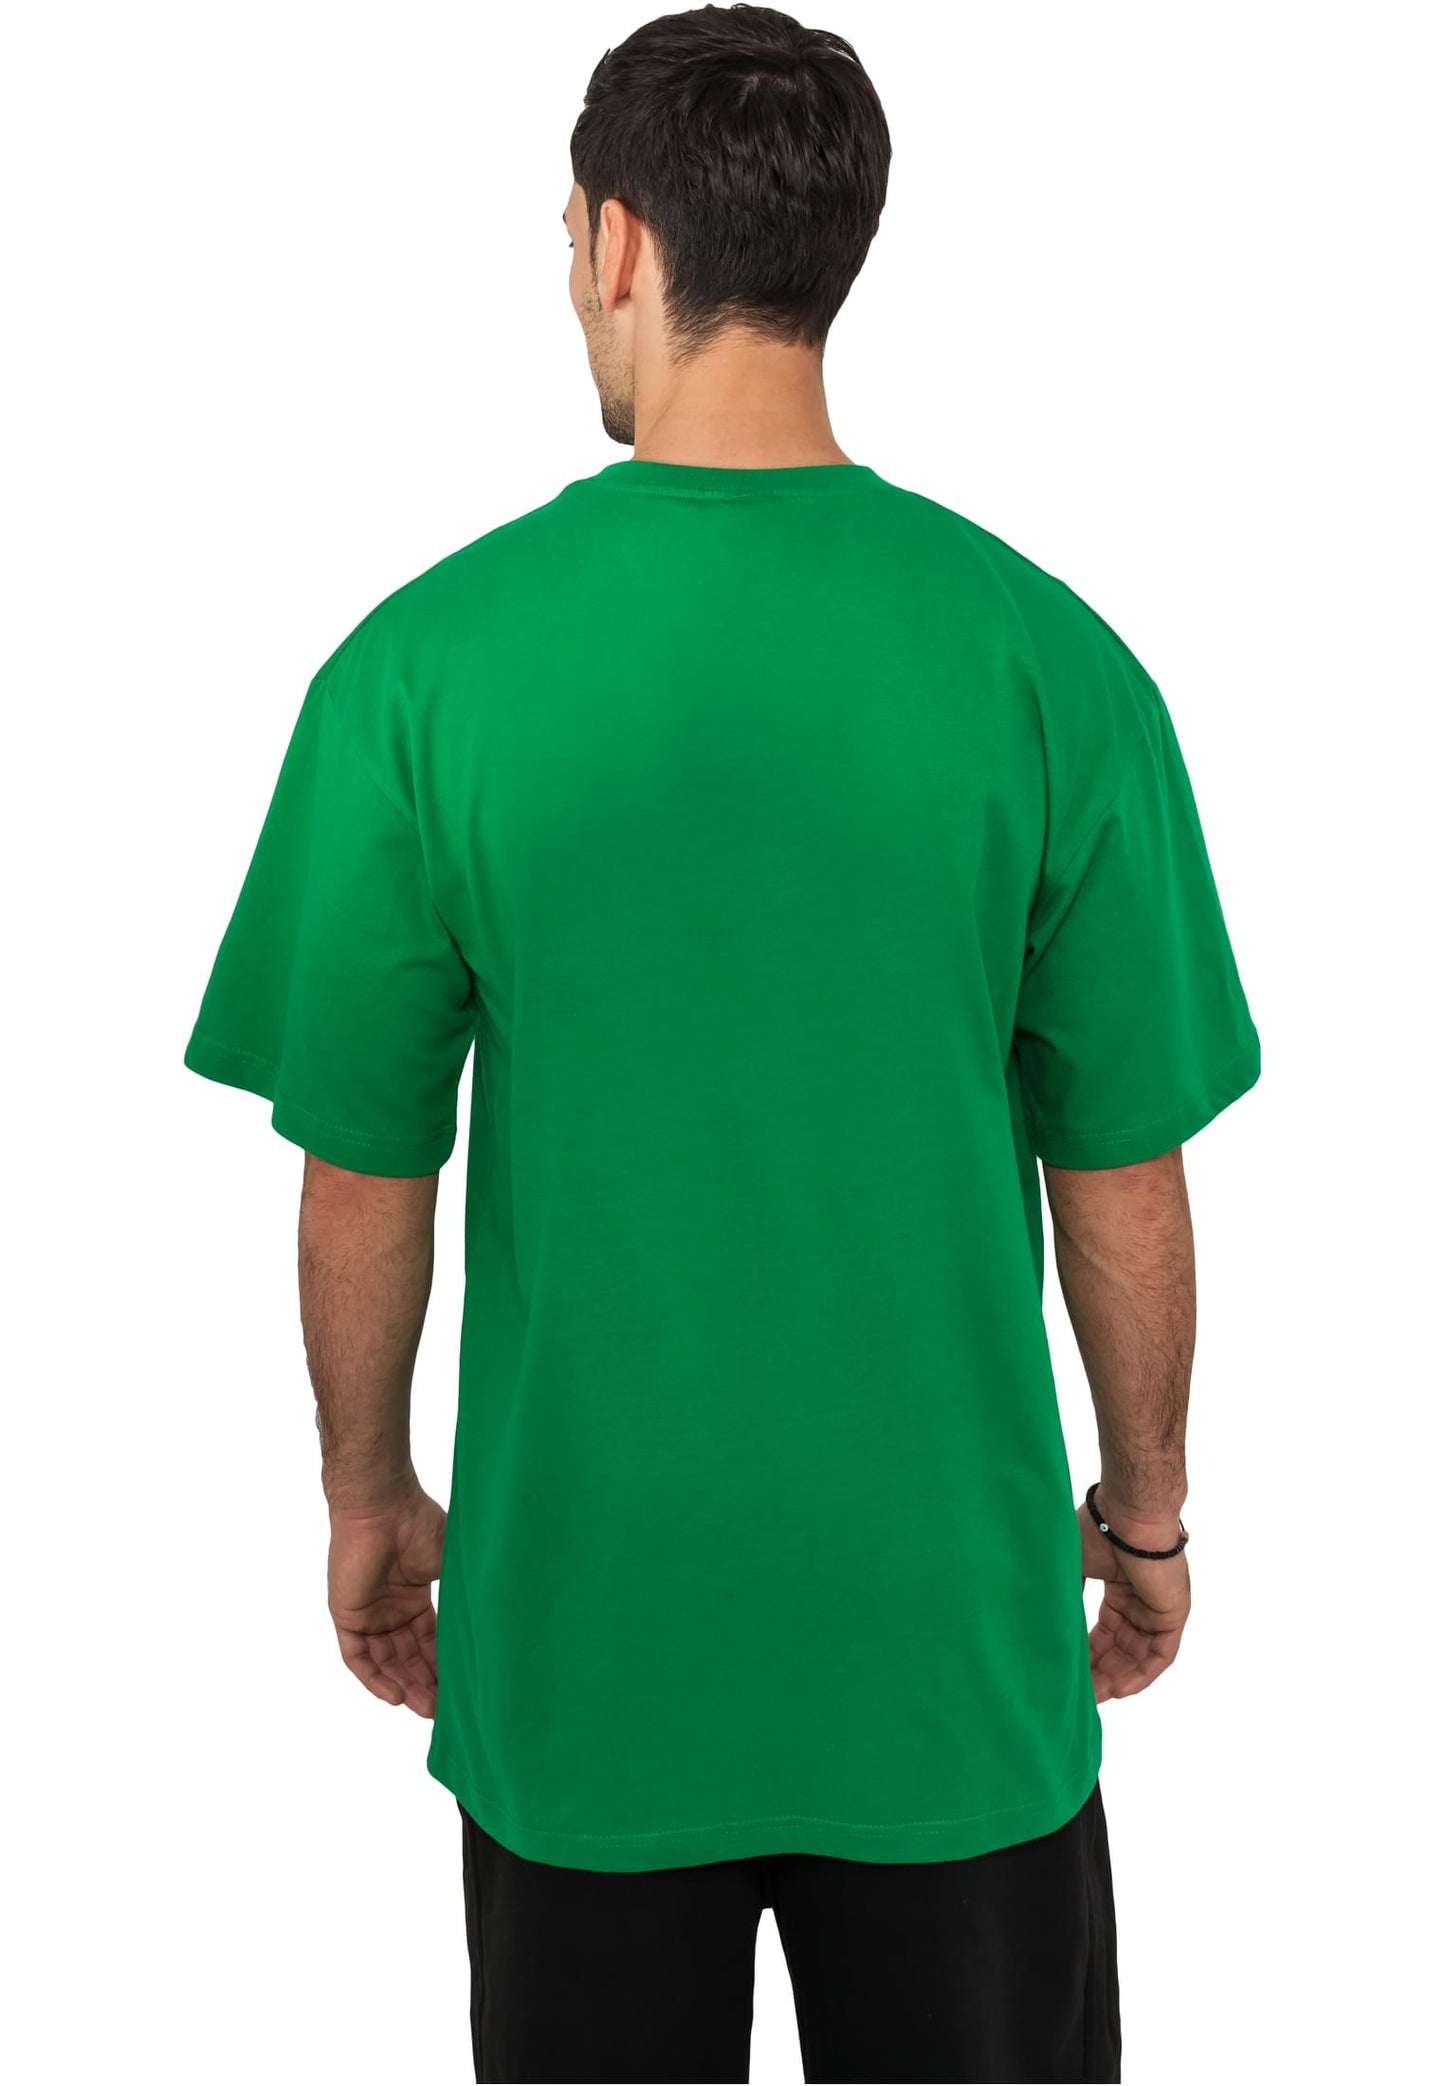 Urban Classics Tall T-Shirt Baggy / Loose Fit in C green